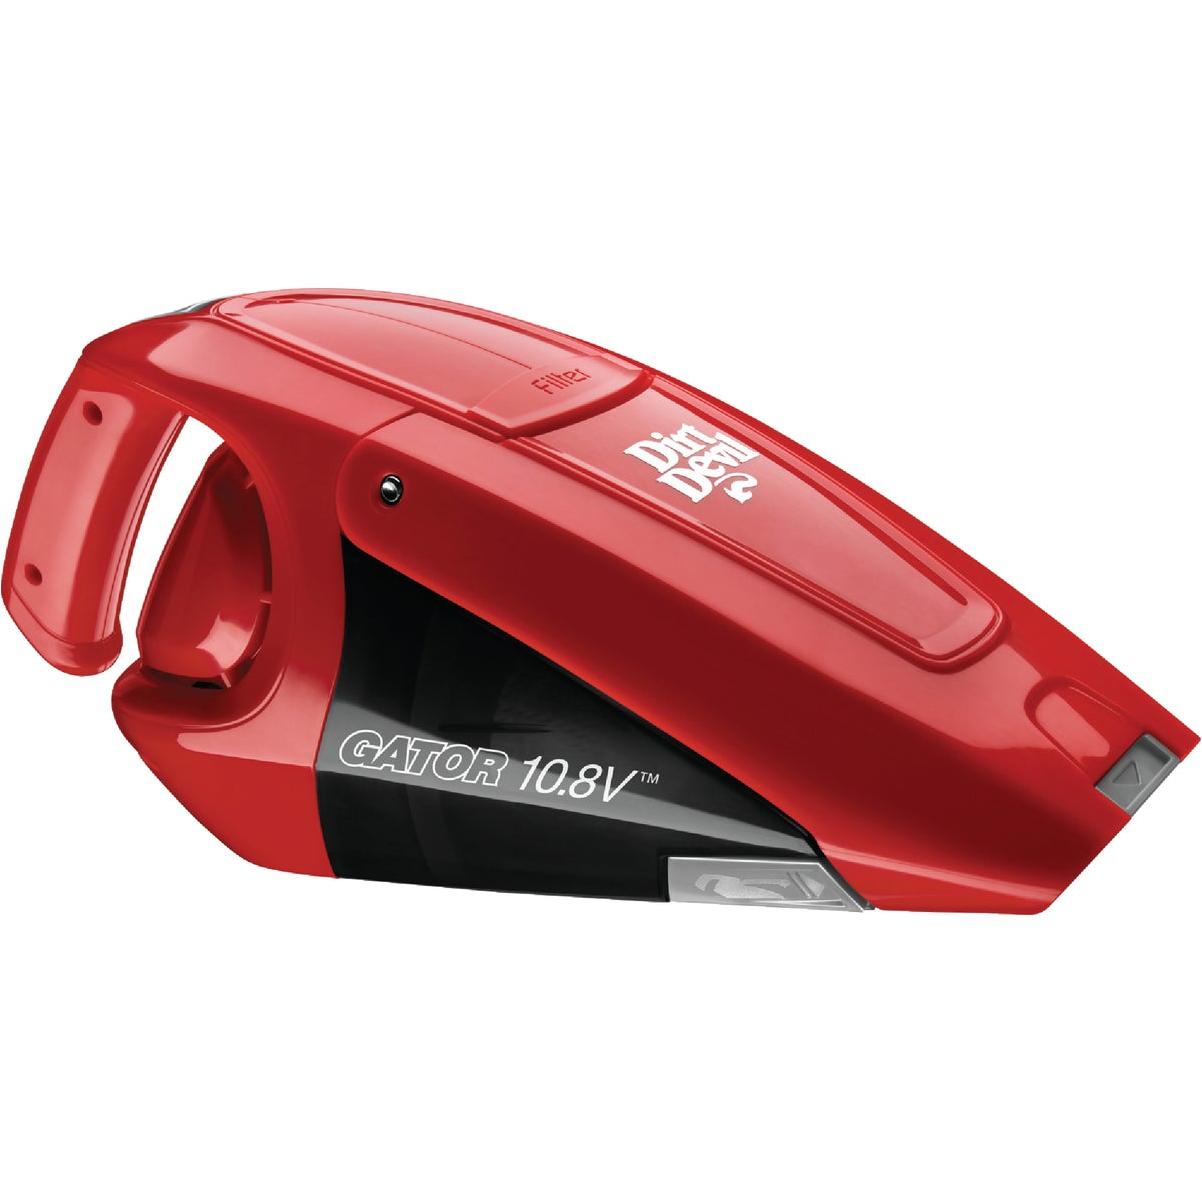 Black & Decker Dustbuster 10.8V 2.0AH Chili Red Cordless Handheld